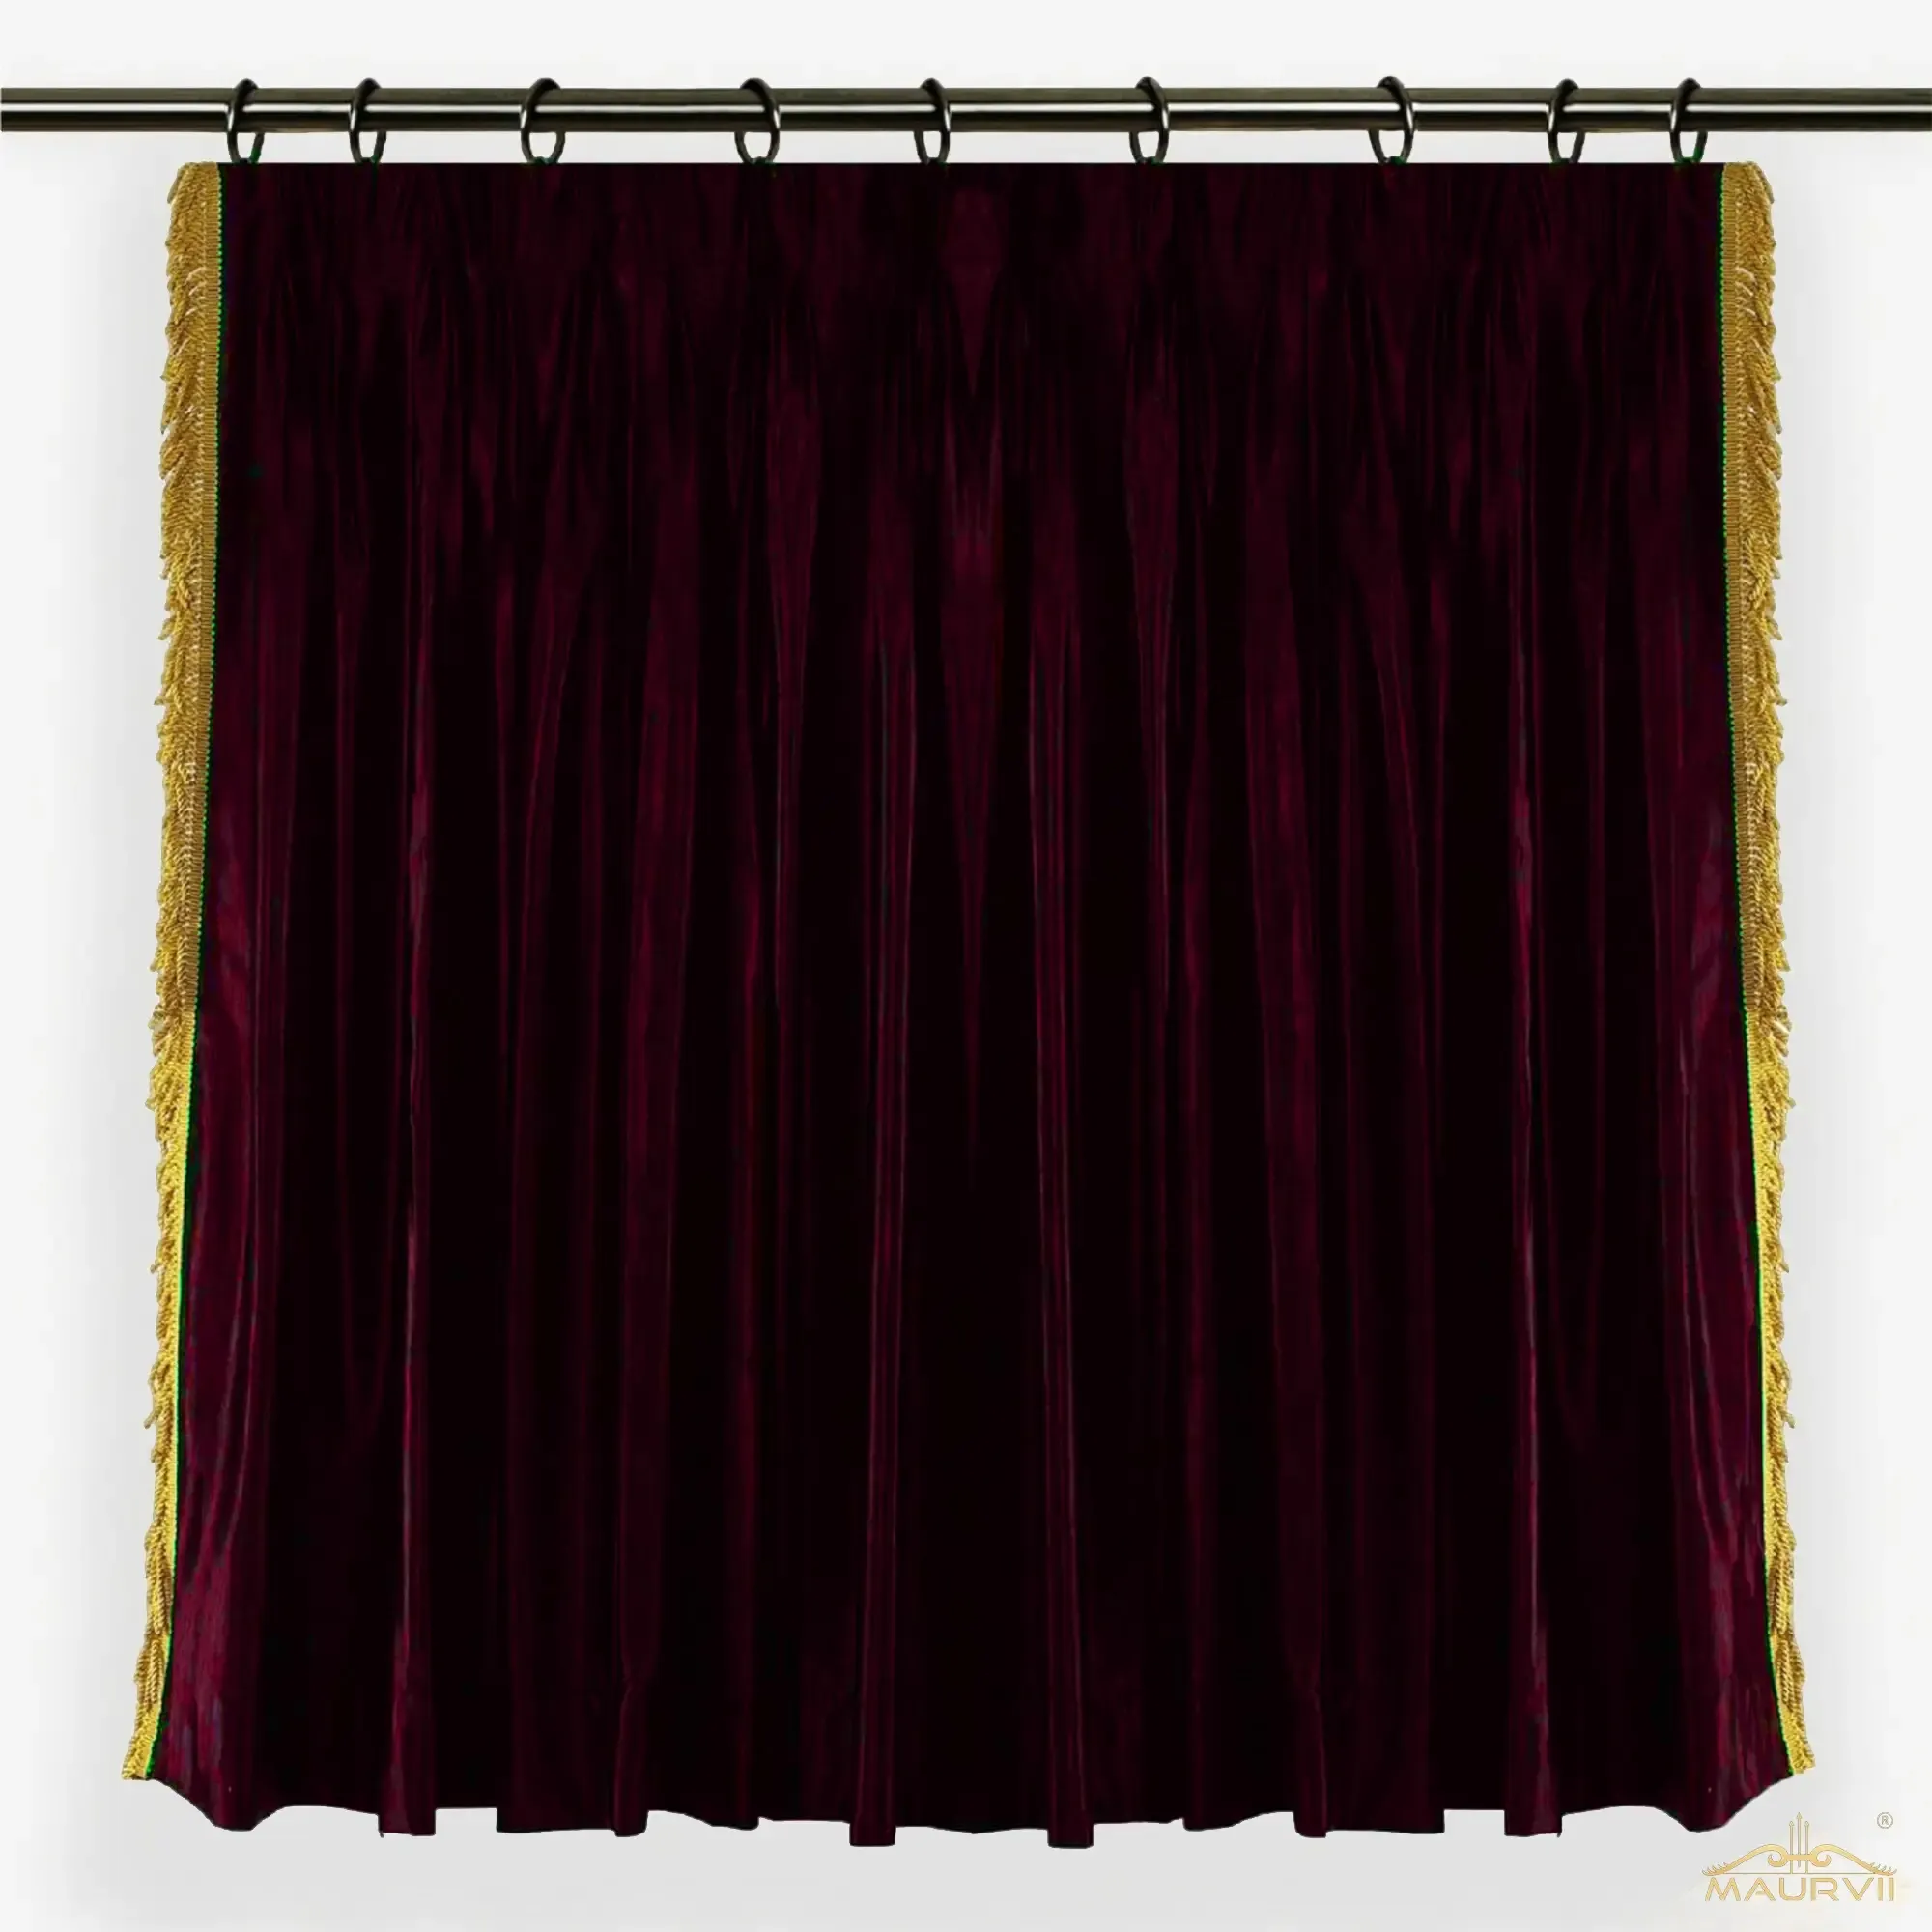 Burgundy curtains with golden fringe